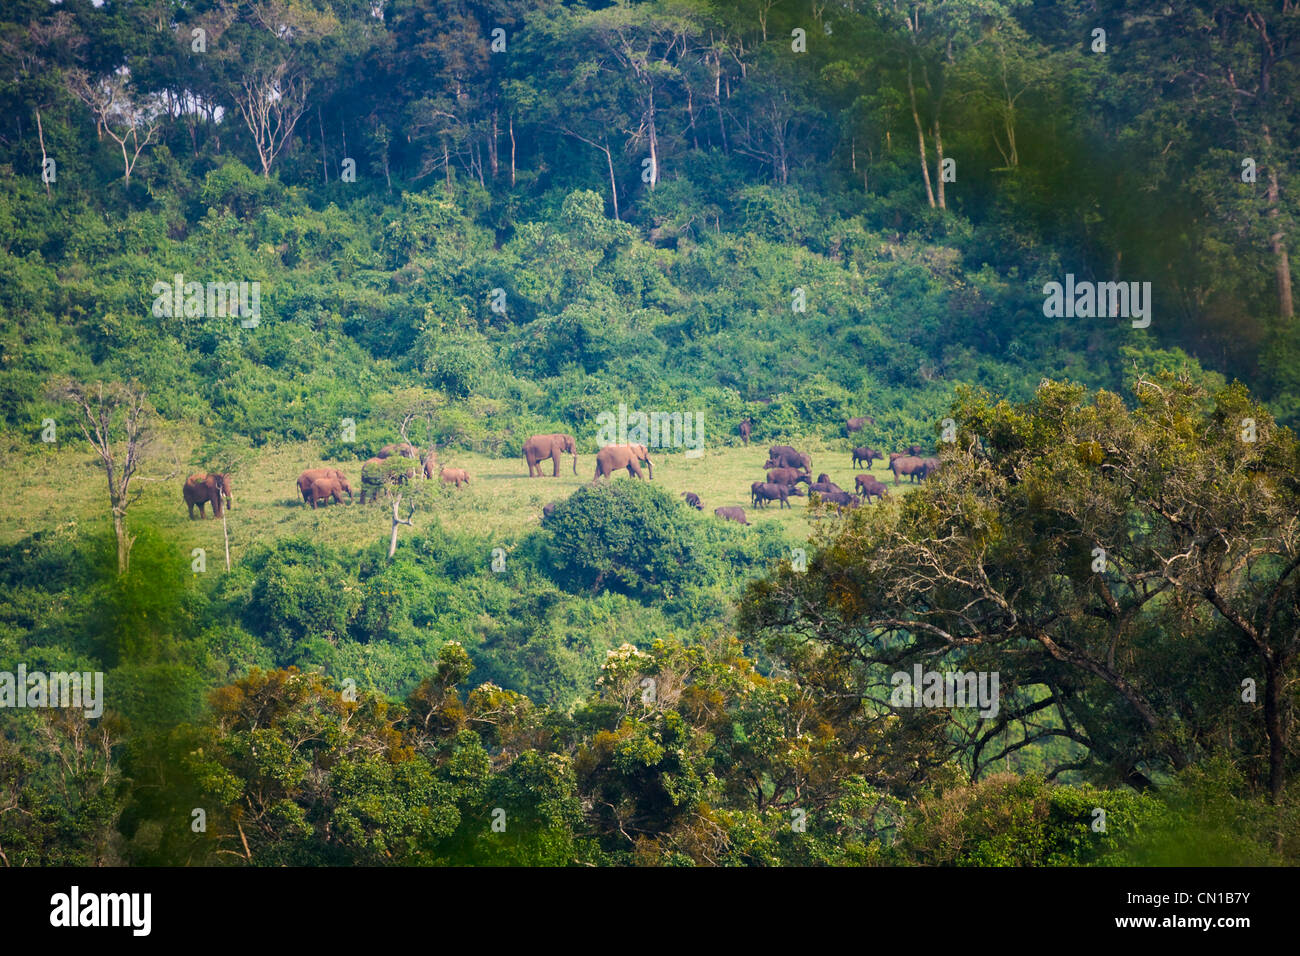 Elephant in the jungle, Aberdare National Park, Kenya Stock Photo